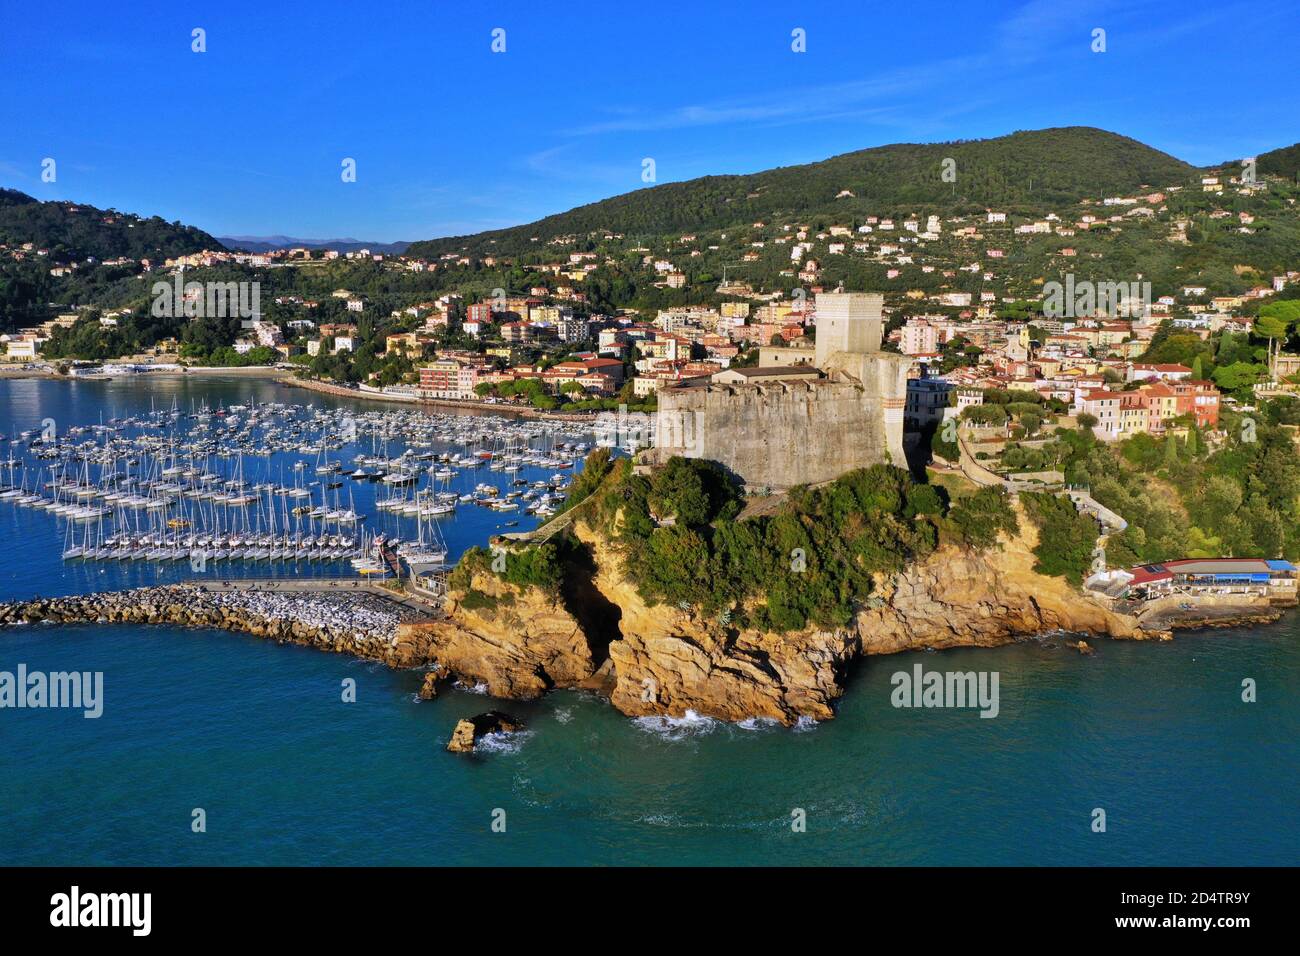 Aerial view of Lerici, La Spezia province, Liguria / Italy Stock Photo